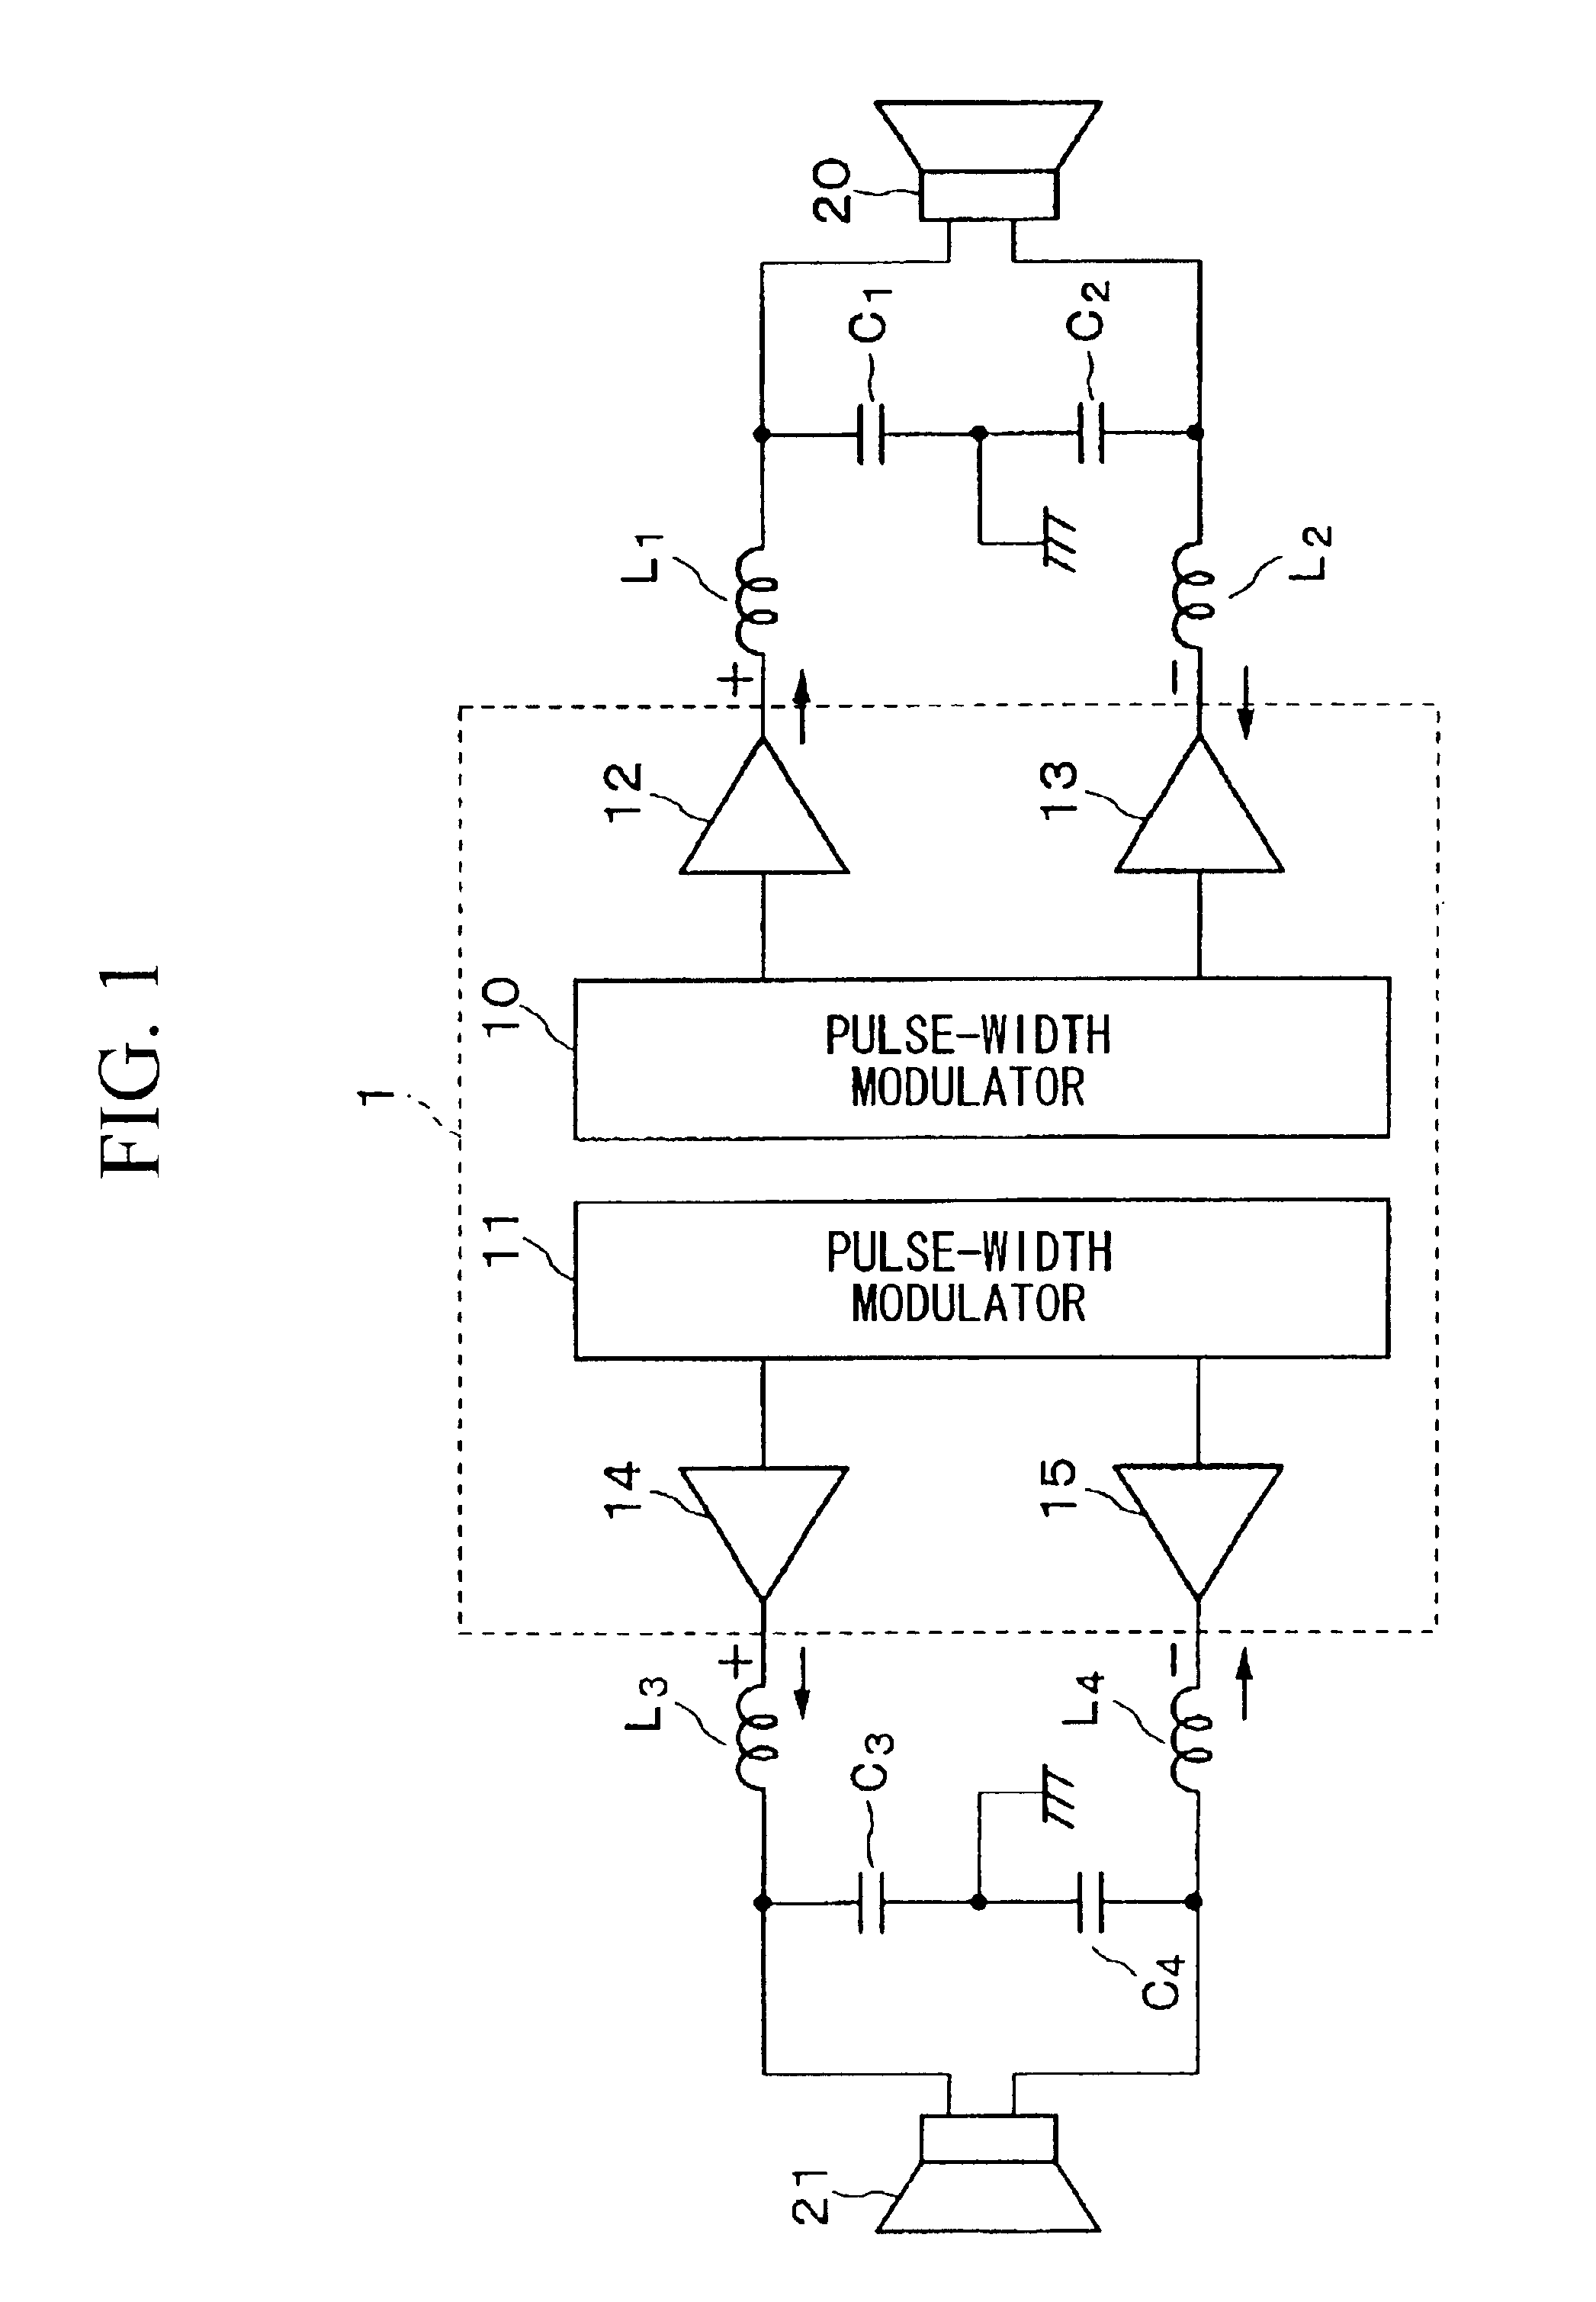 Class-D amplifier of BTL output type using filter coil and low-pass filter